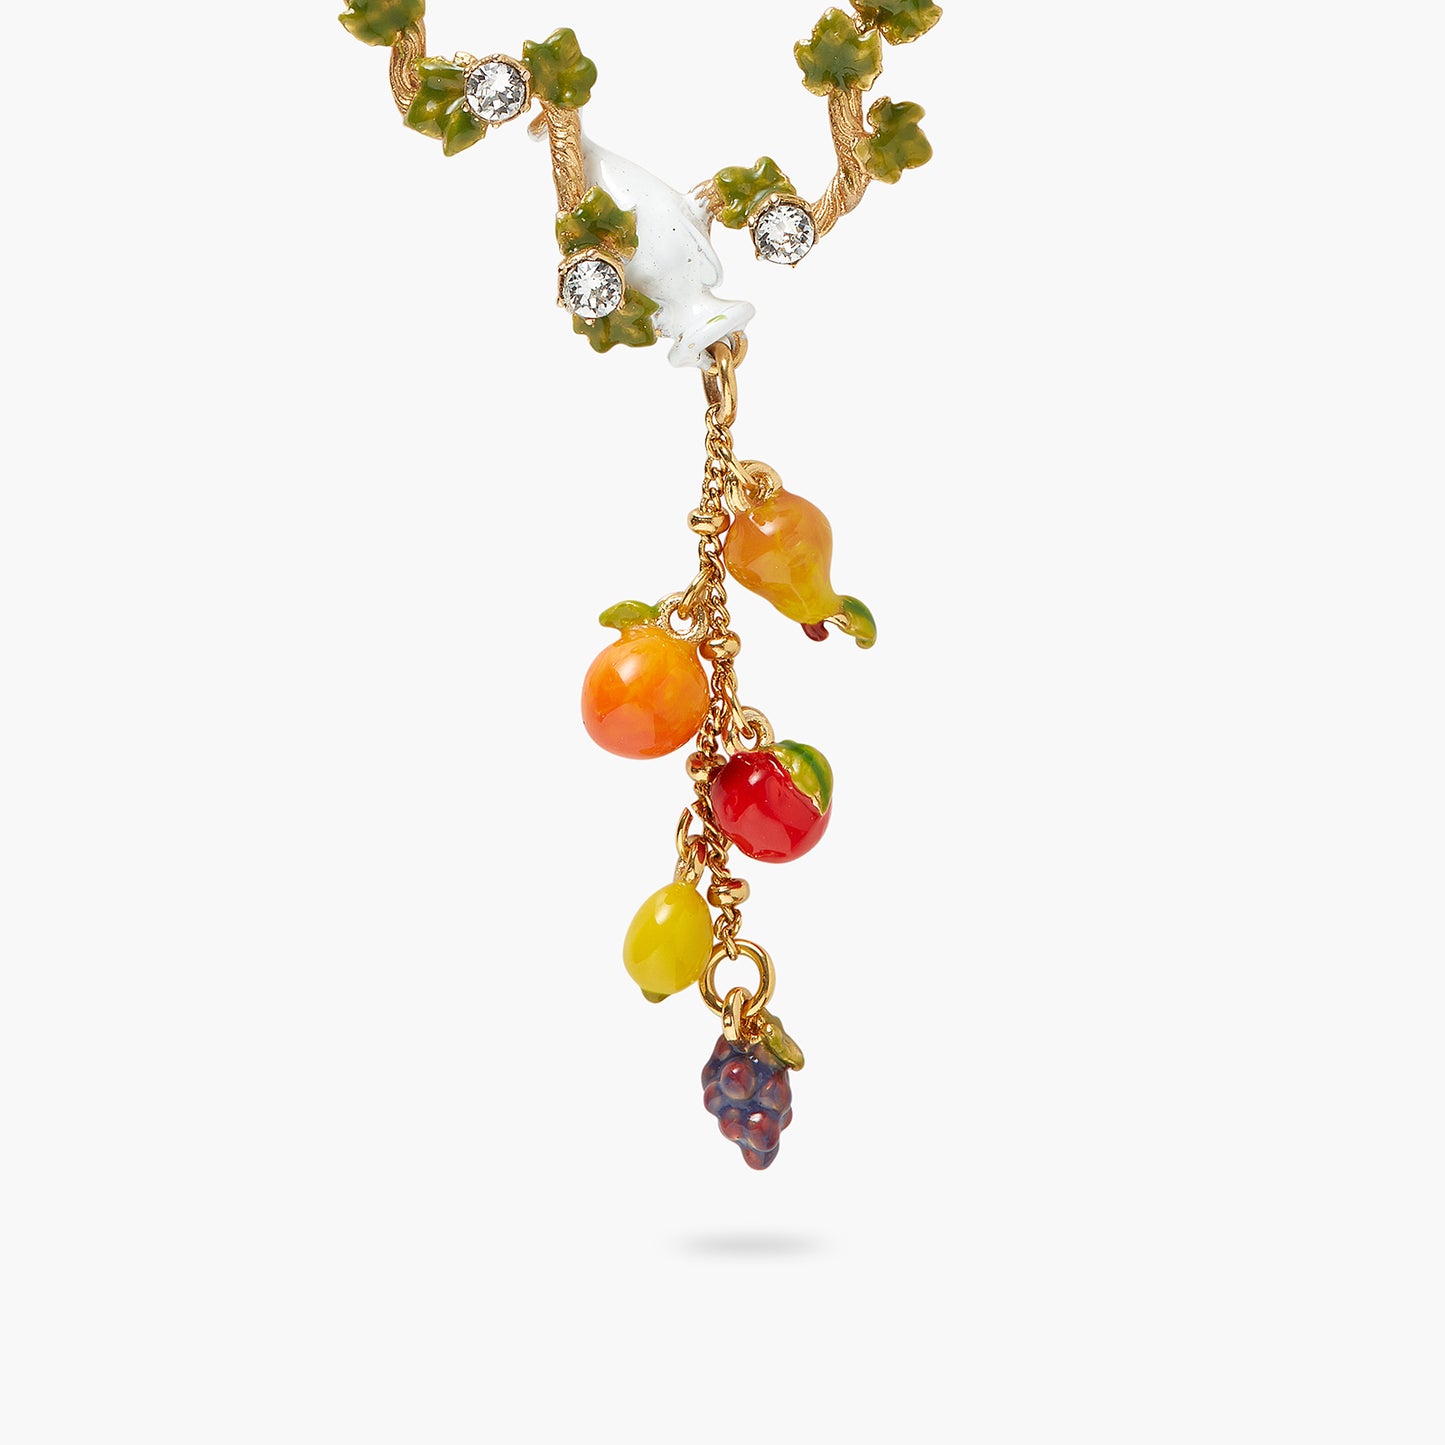 Amphora, Vine Leaves And Fruit Pendant Necklace | AQVT3081